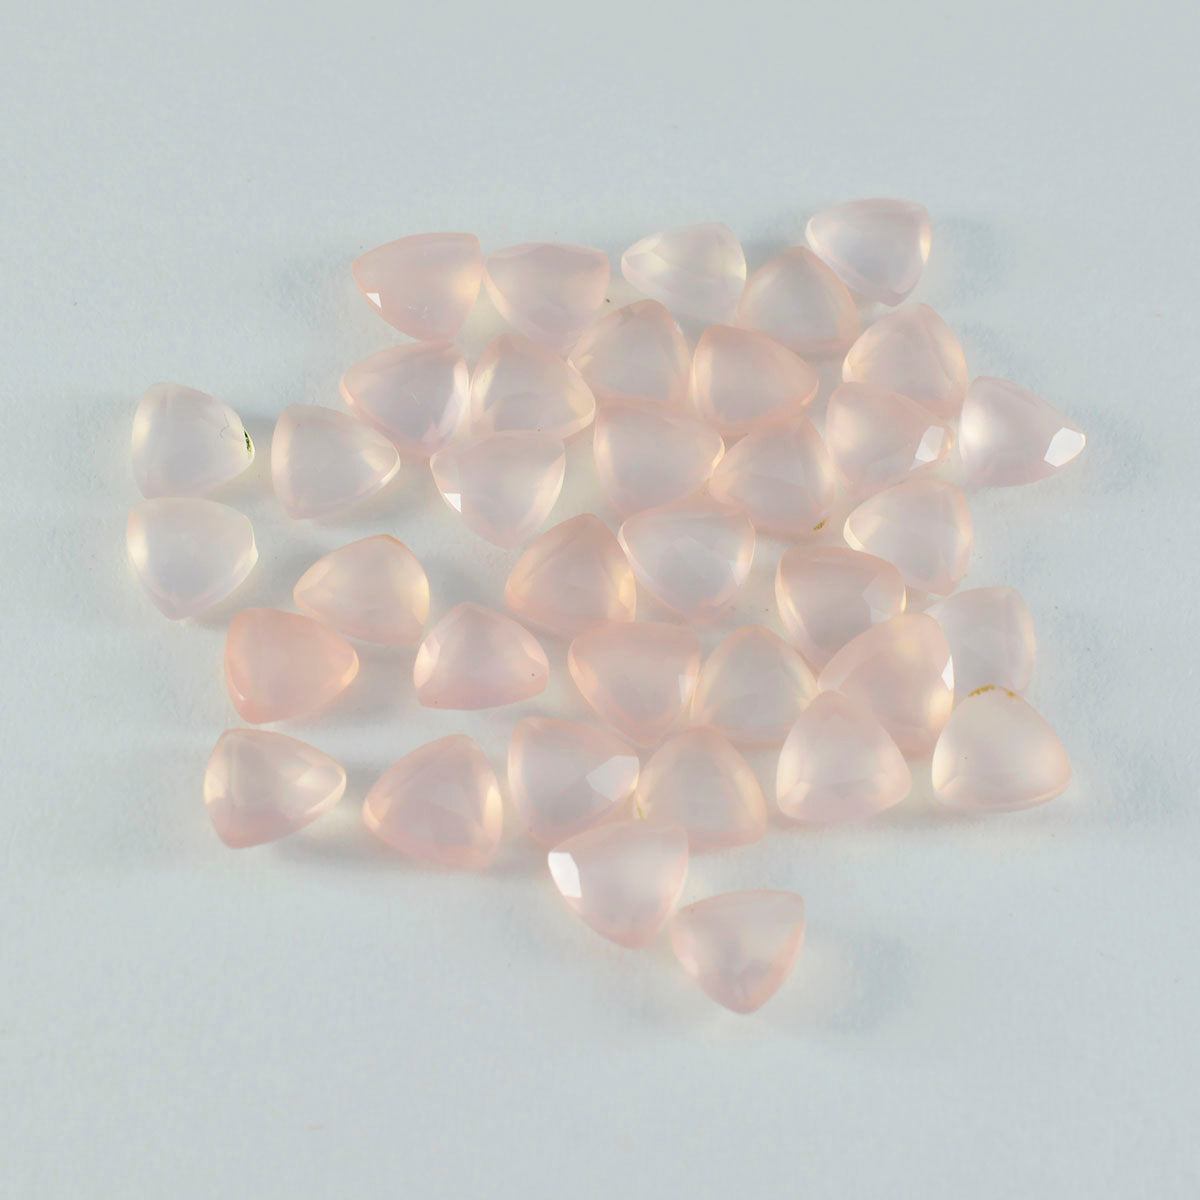 Riyogems 1PC Pink Rose Quartz Faceted 7x7 mm Trillion Shape AA Quality Loose Gems